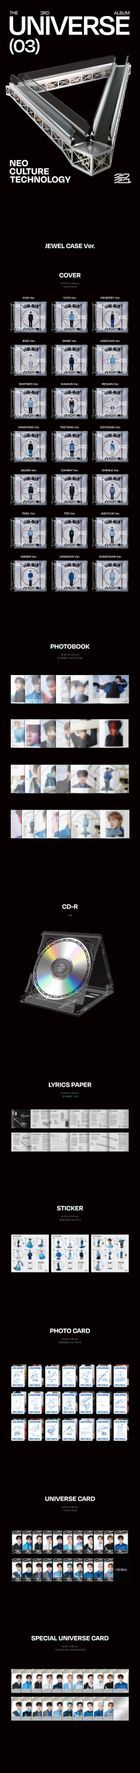 NCT Vol. 3 - Universe (Jewel Case Version) (Renjun Version)